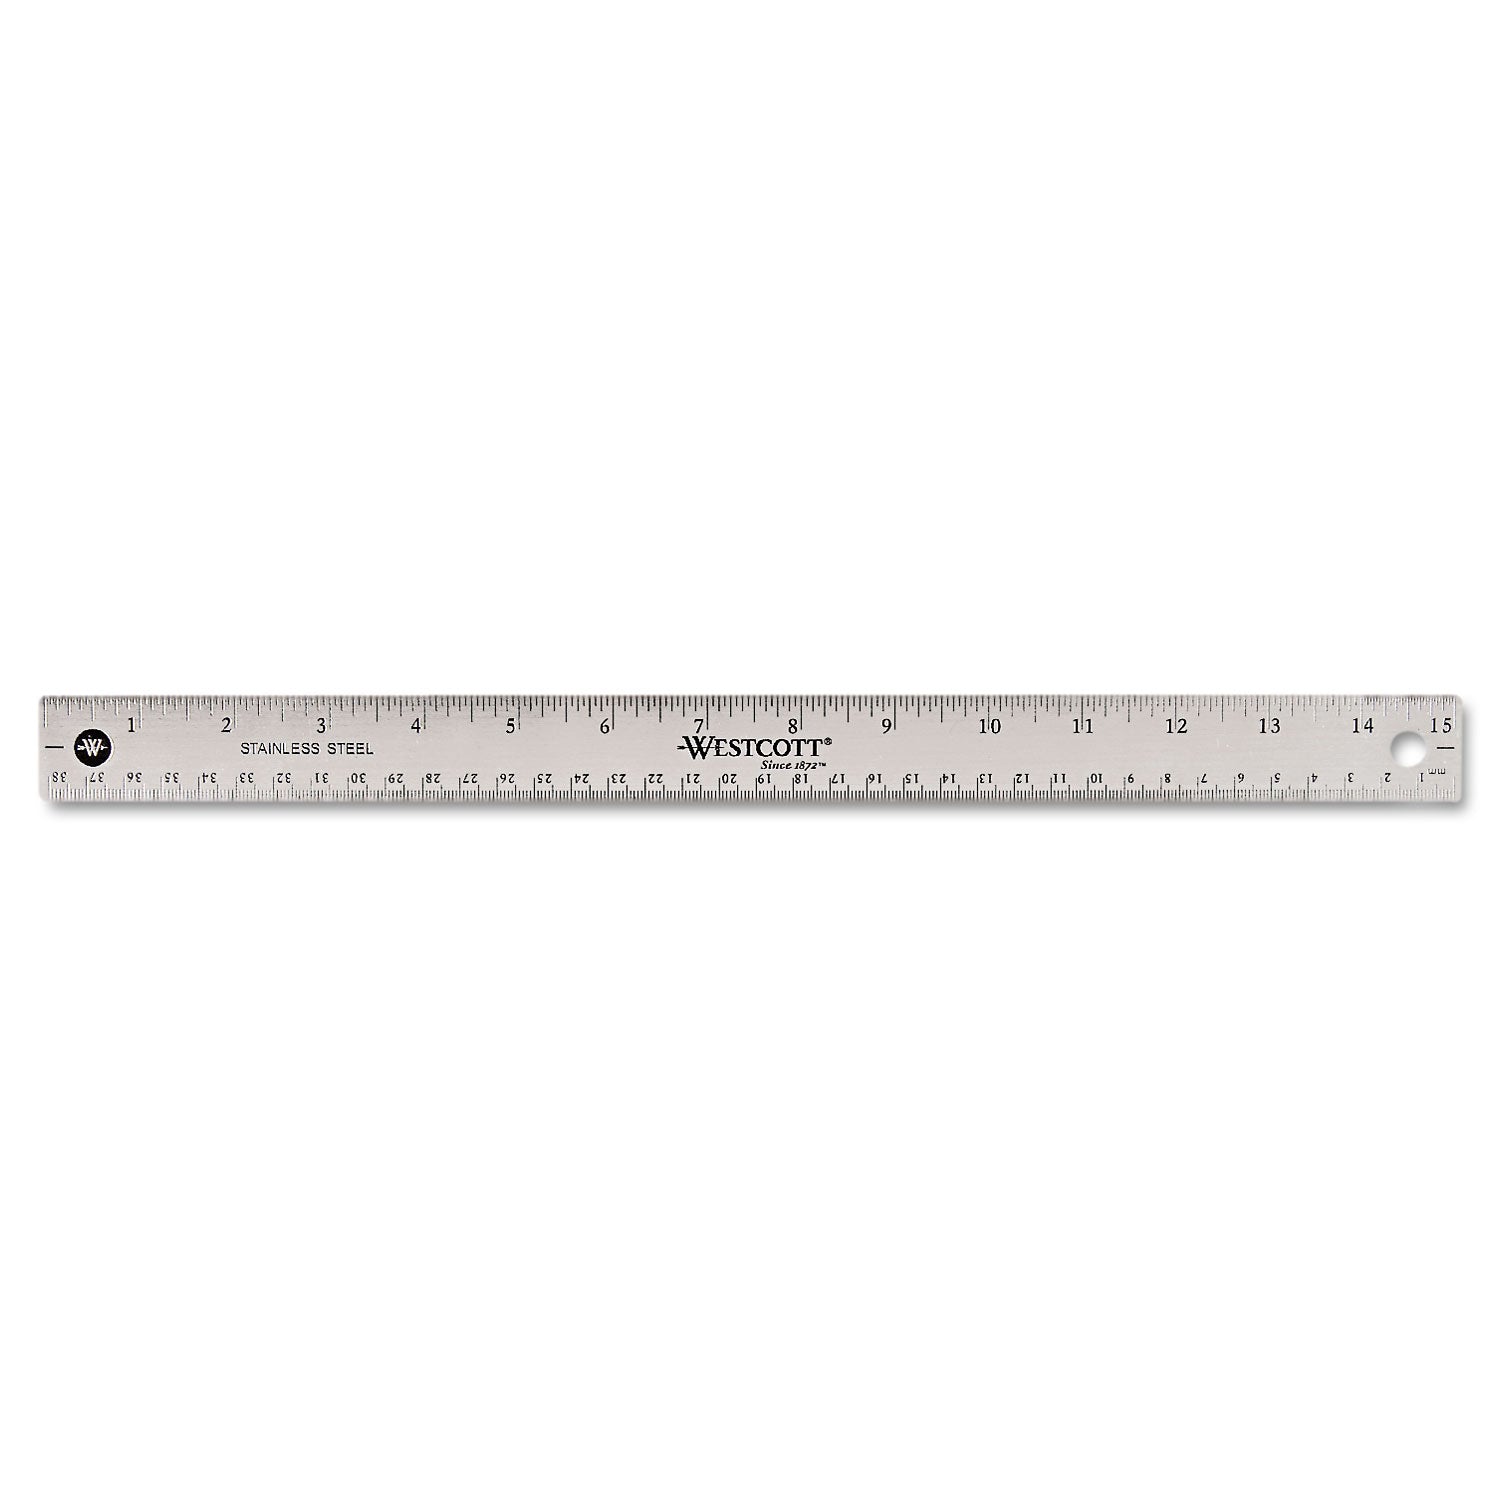 Stainless Steel Office Ruler With Non Slip Cork Base, Standard/Metric, 15" Long - 